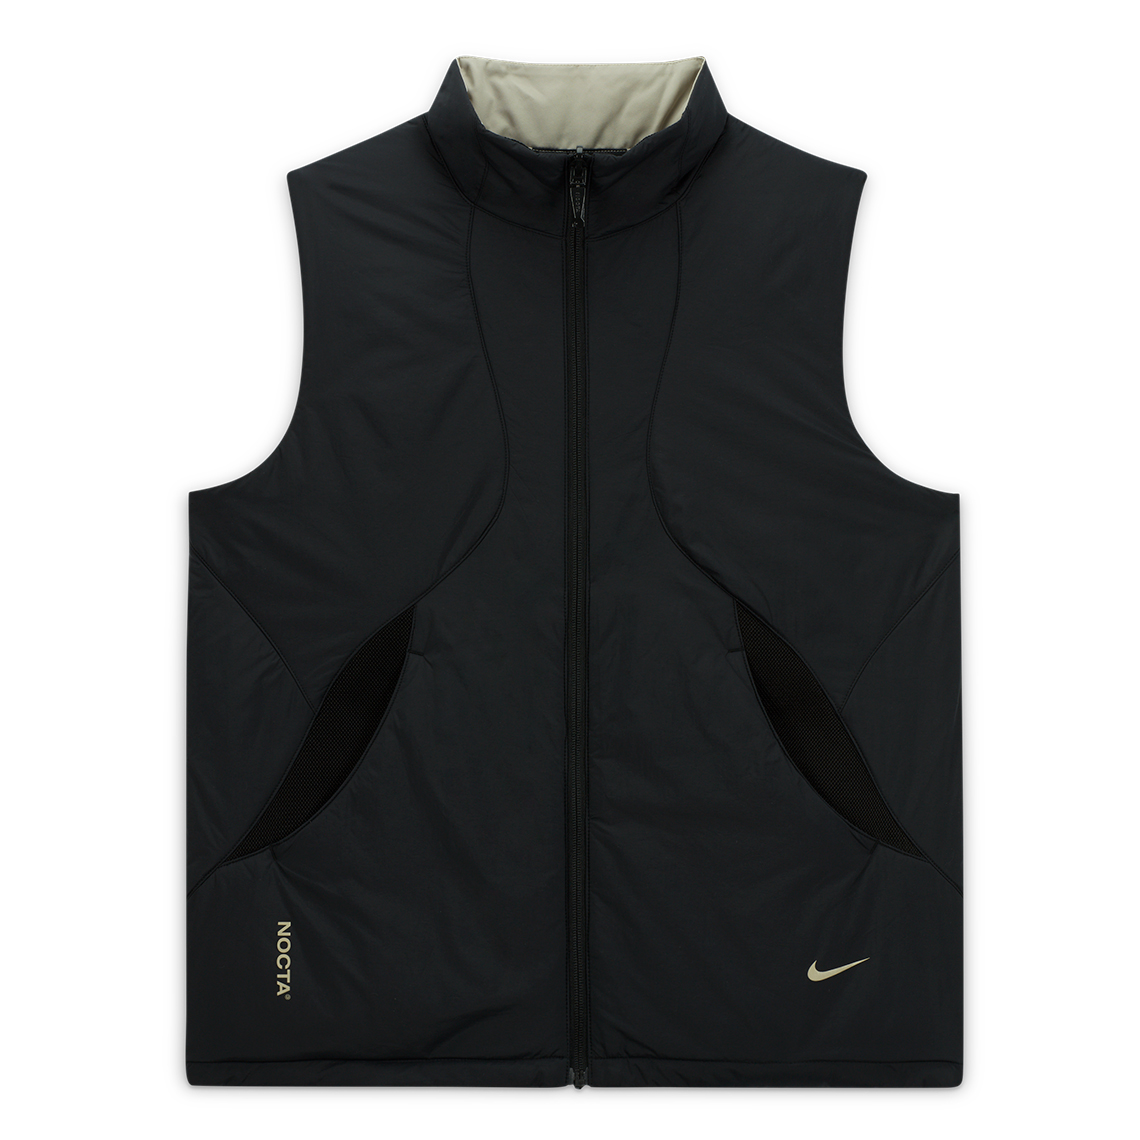 Dr2663 010 Nocta Nike super Distant Regards Lightweight Reversible Vest